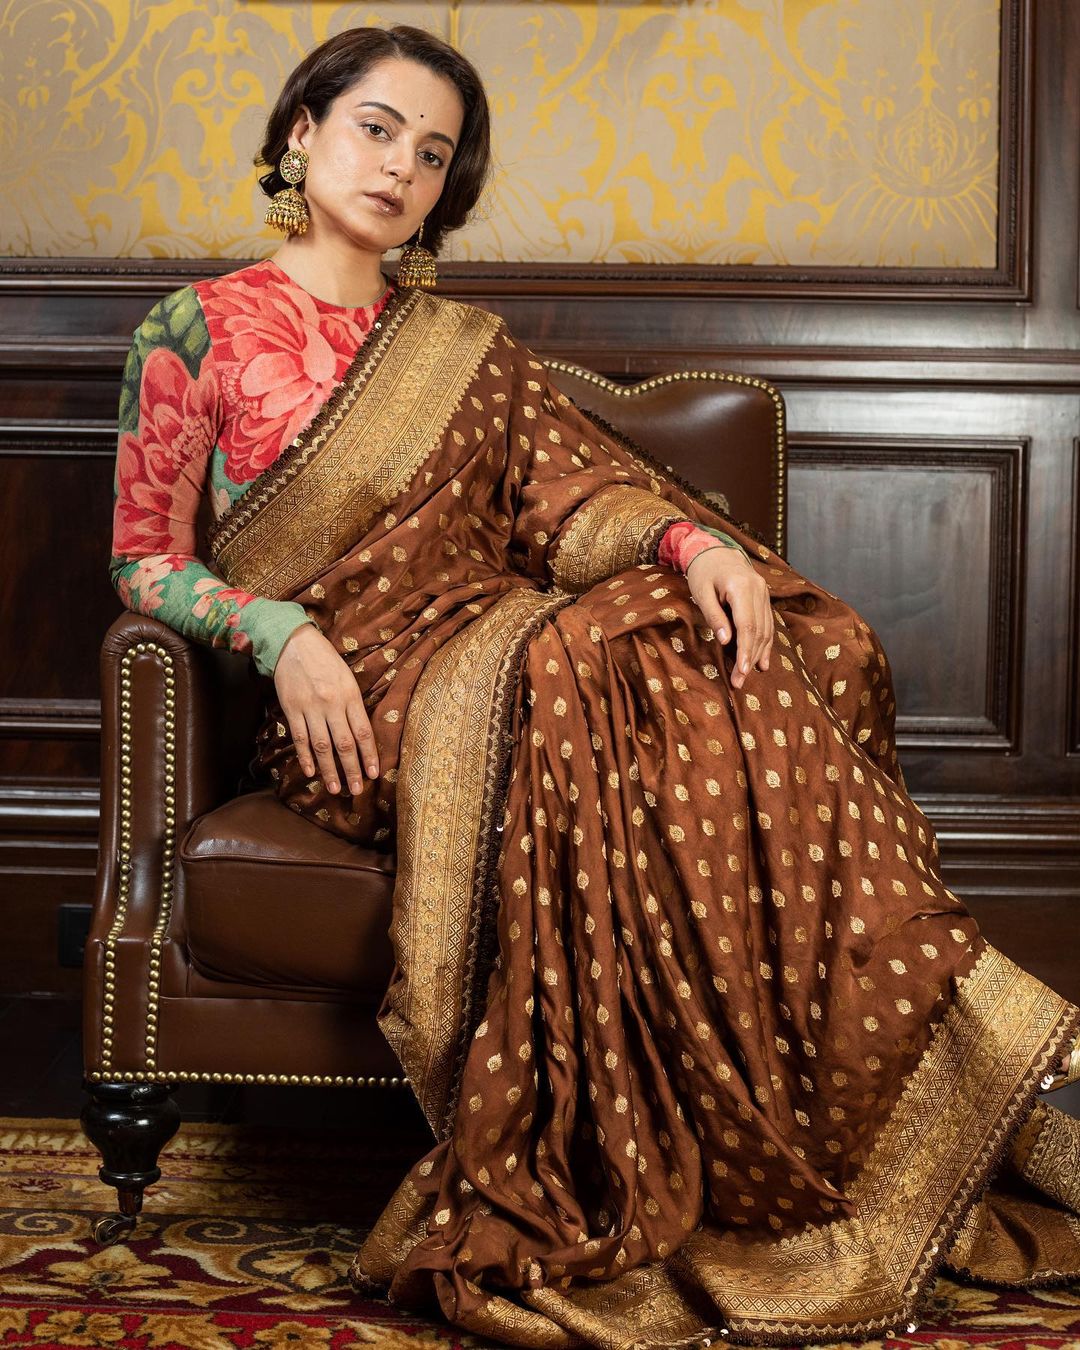 Kangana Ranaut Looks Regal Promoting Thalaivii In Gorgeous Sarees, See Her Mesmerising Photos